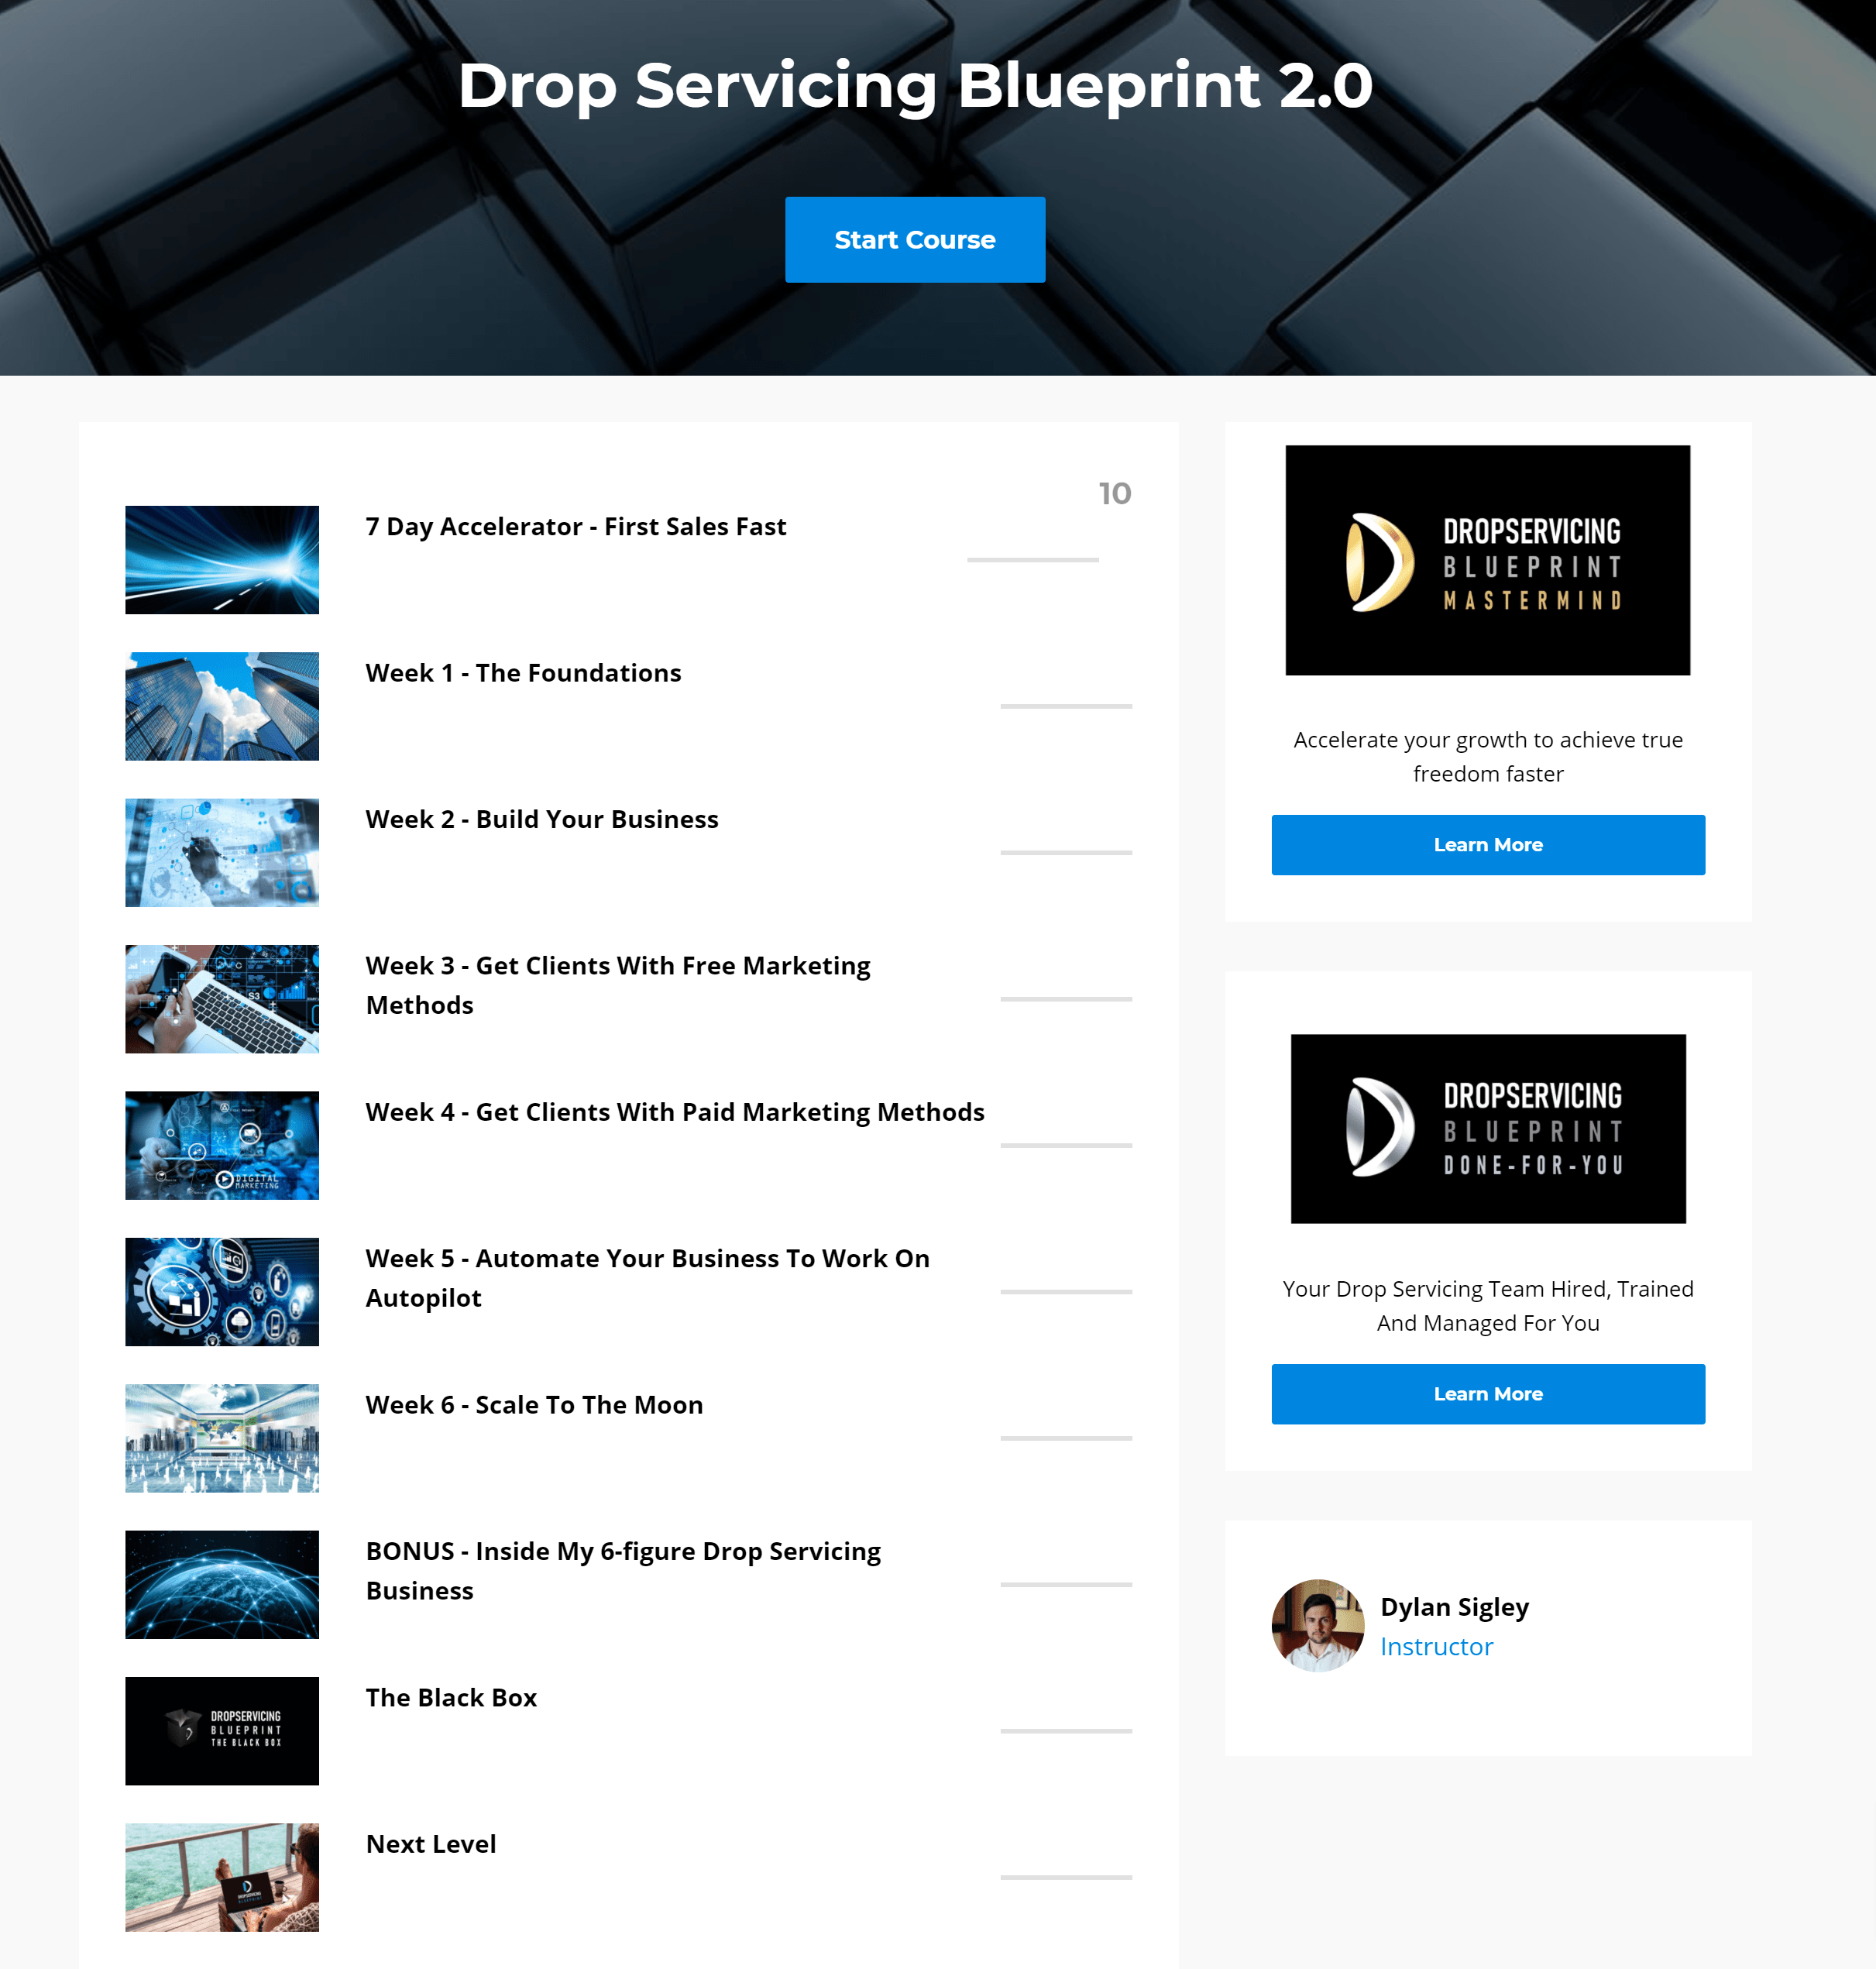 Drop Servicing Blueprint reviews